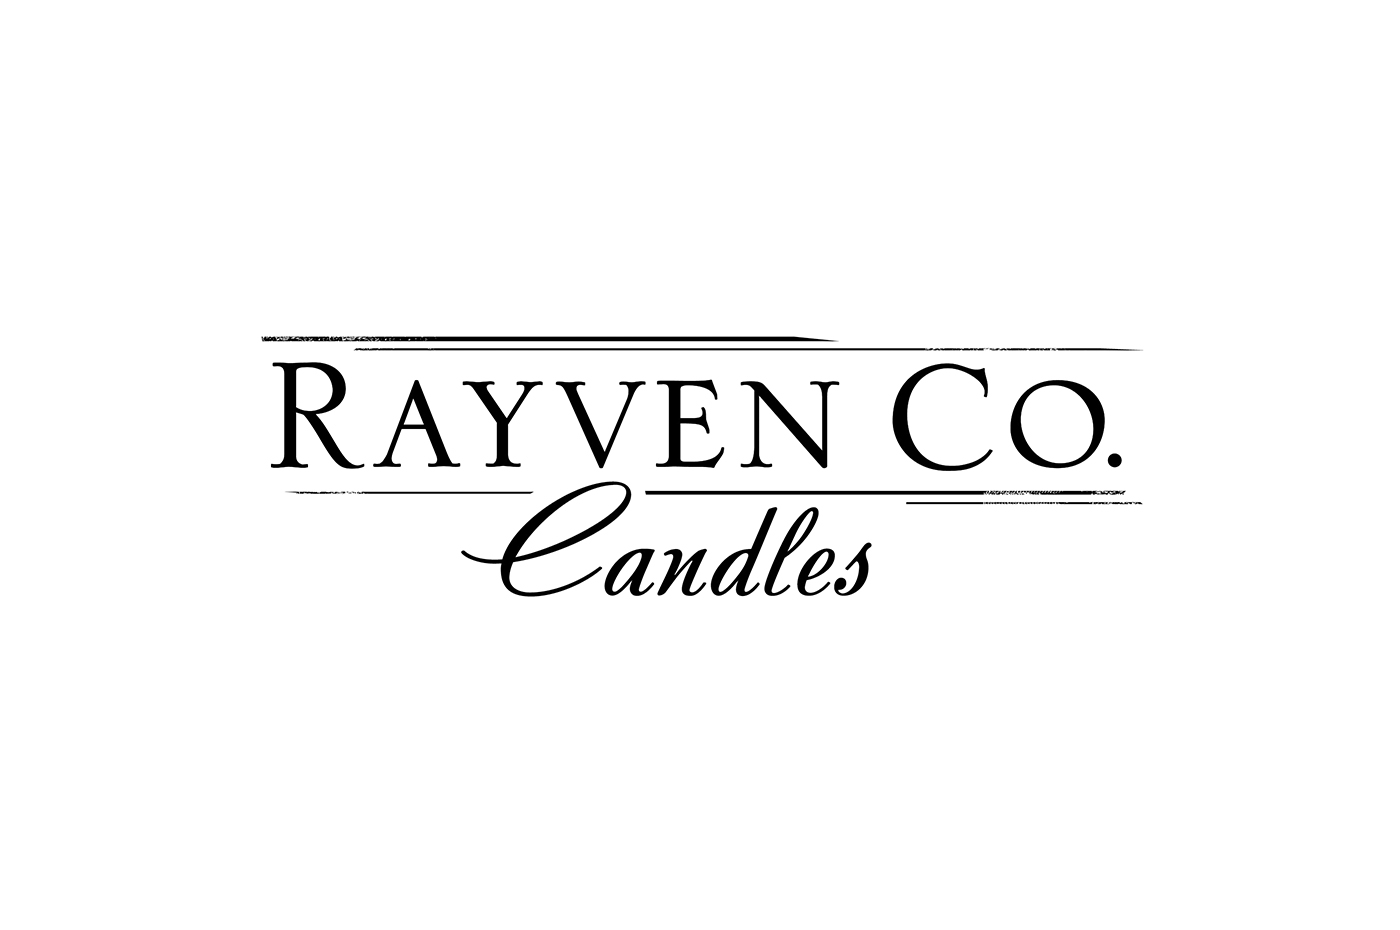 Candle Label Design